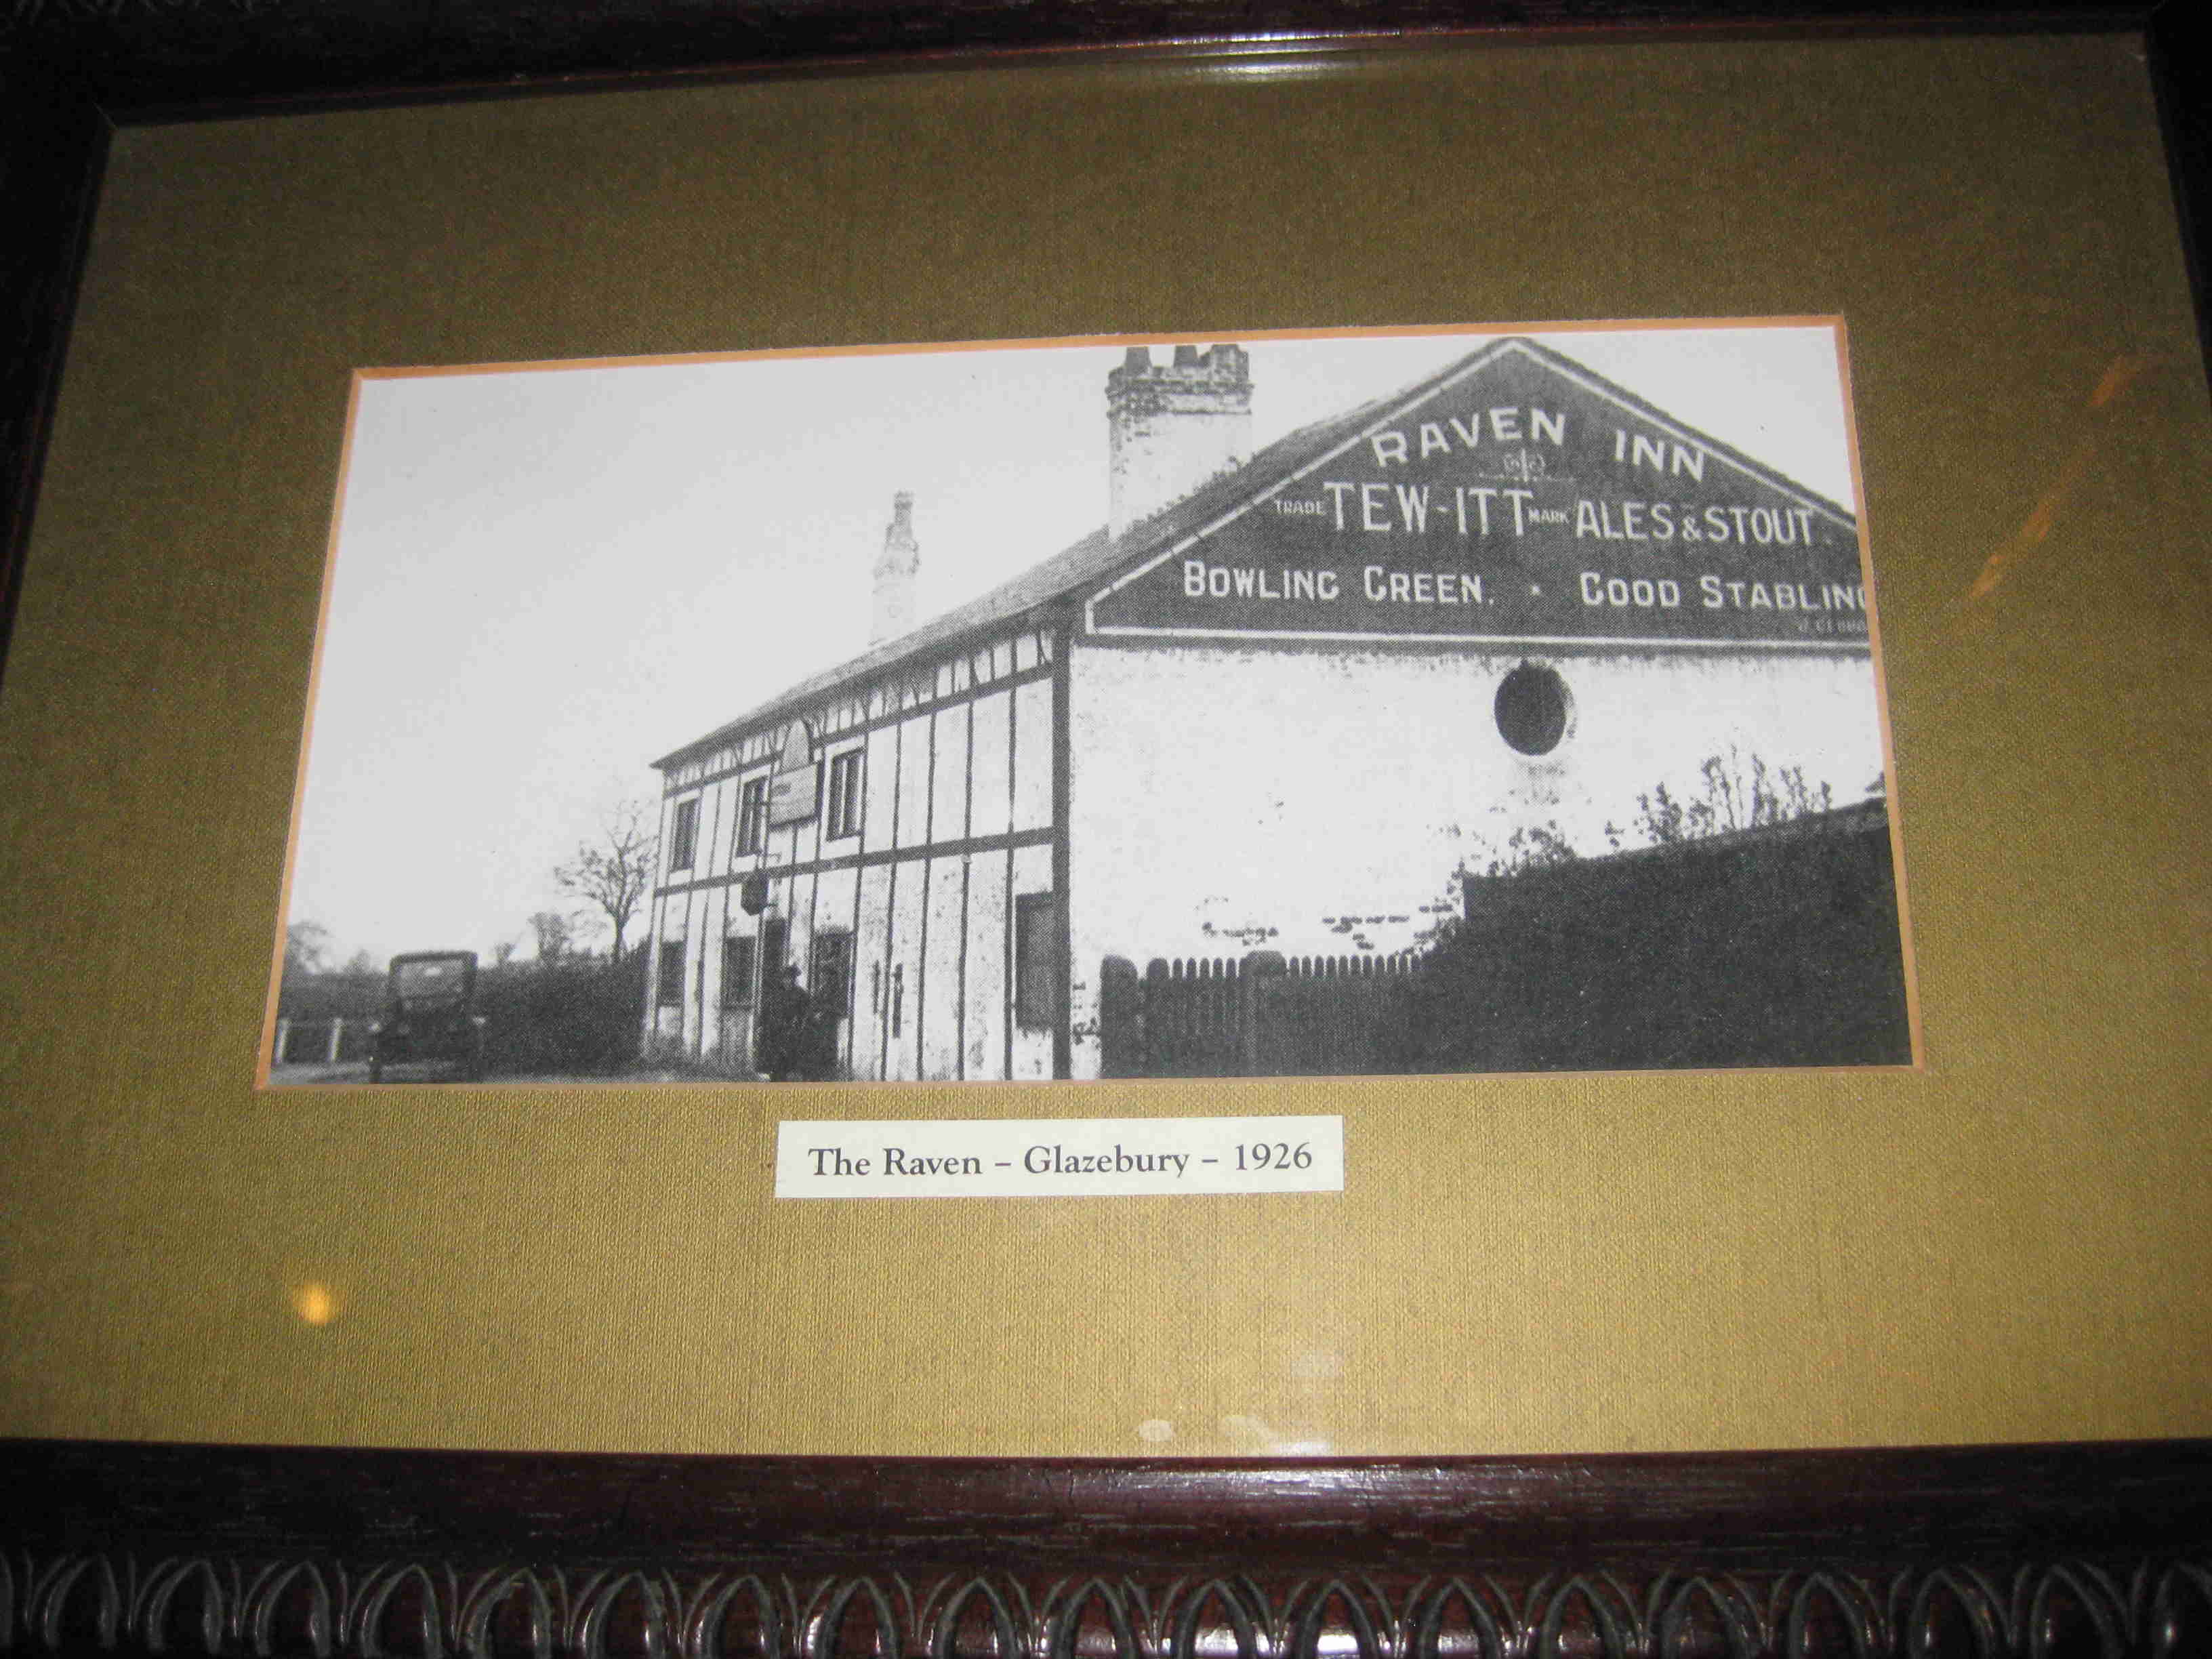 The Raven Inn Glazebury 1926 IMG 2093 copy1